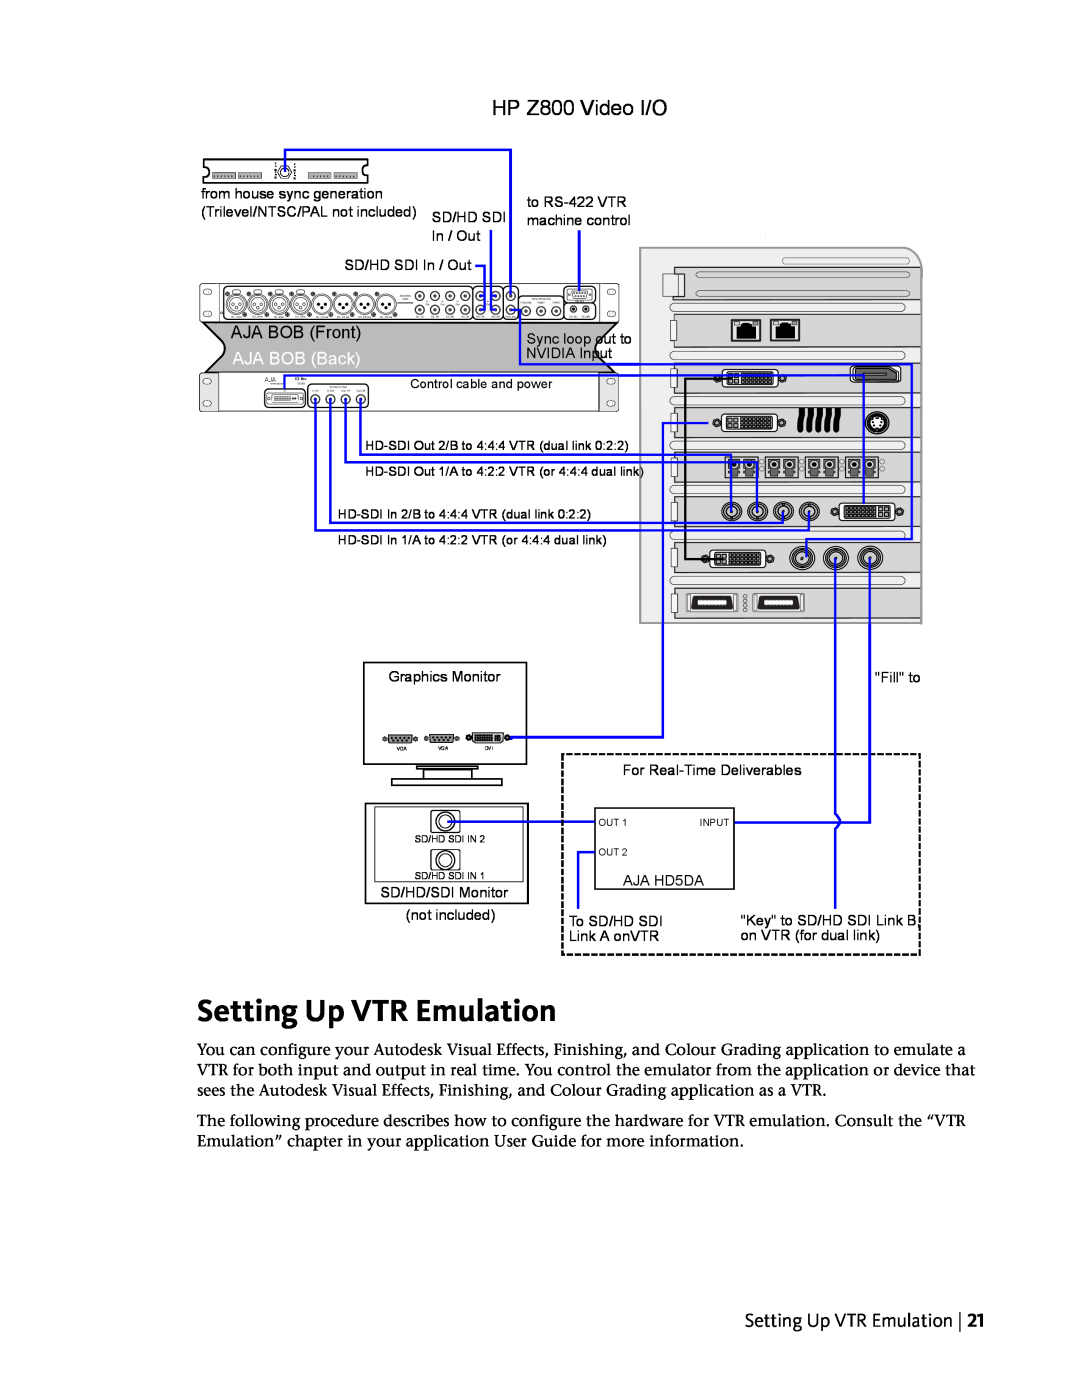 HP manual Setting Up VTR Emulation, HP Z800 Video I/O, AJA BOB Front, AJA BOB Back 